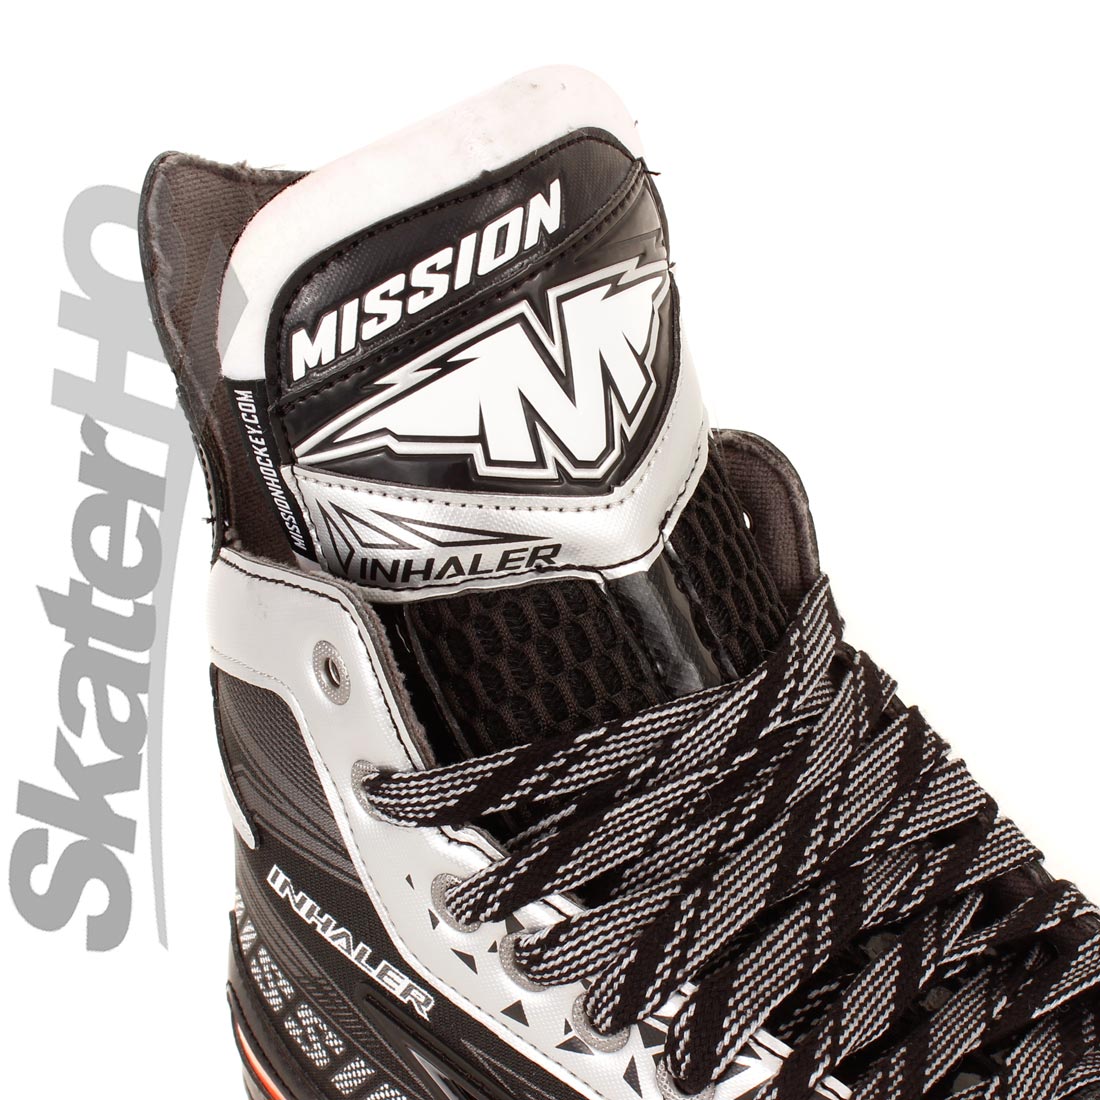 Mission Inhaler NLS3 Skate - 8US Inline Hockey Skates